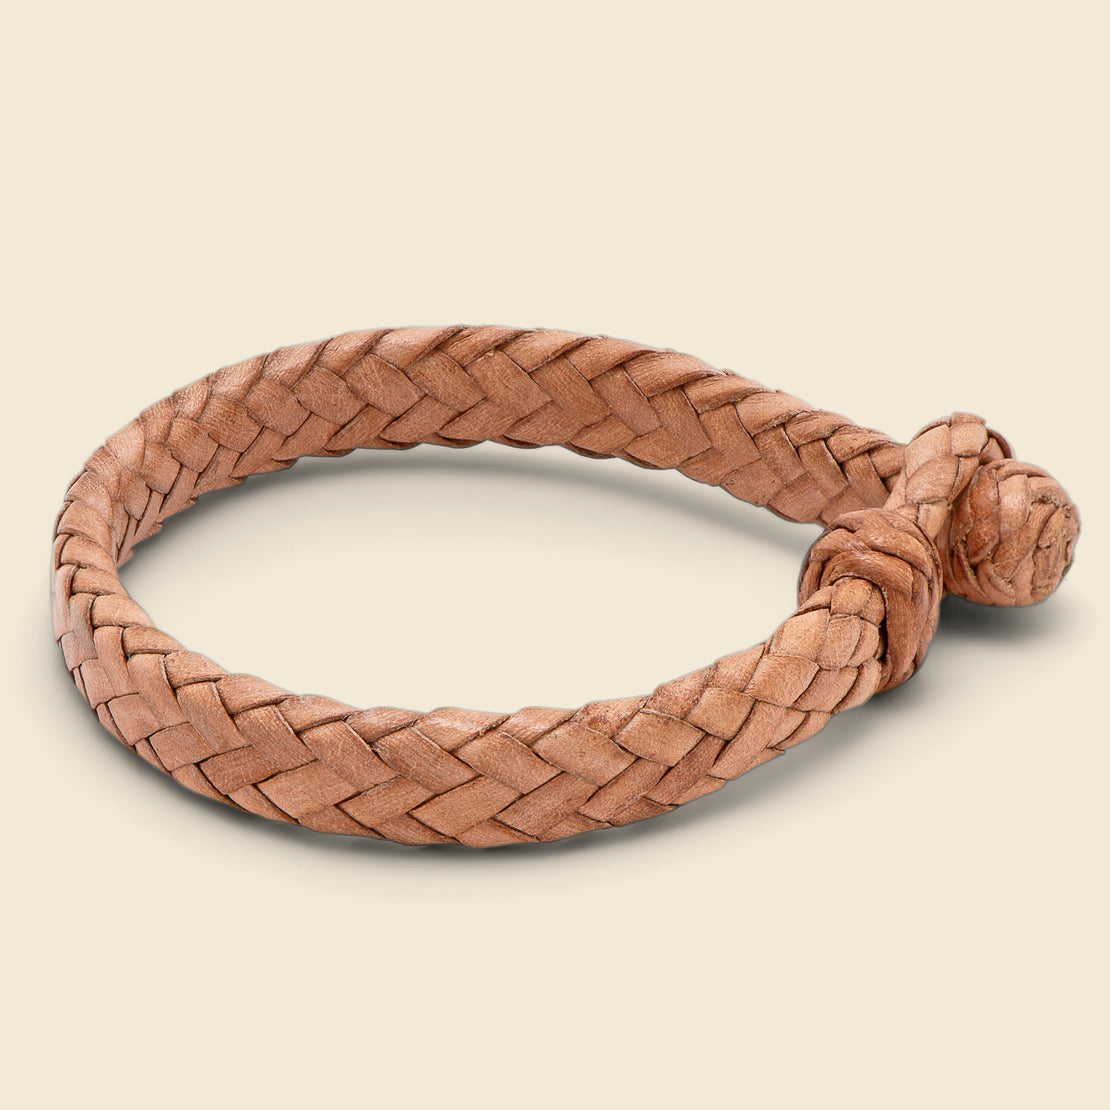 Flat Woven Leather Bracelet - Tan